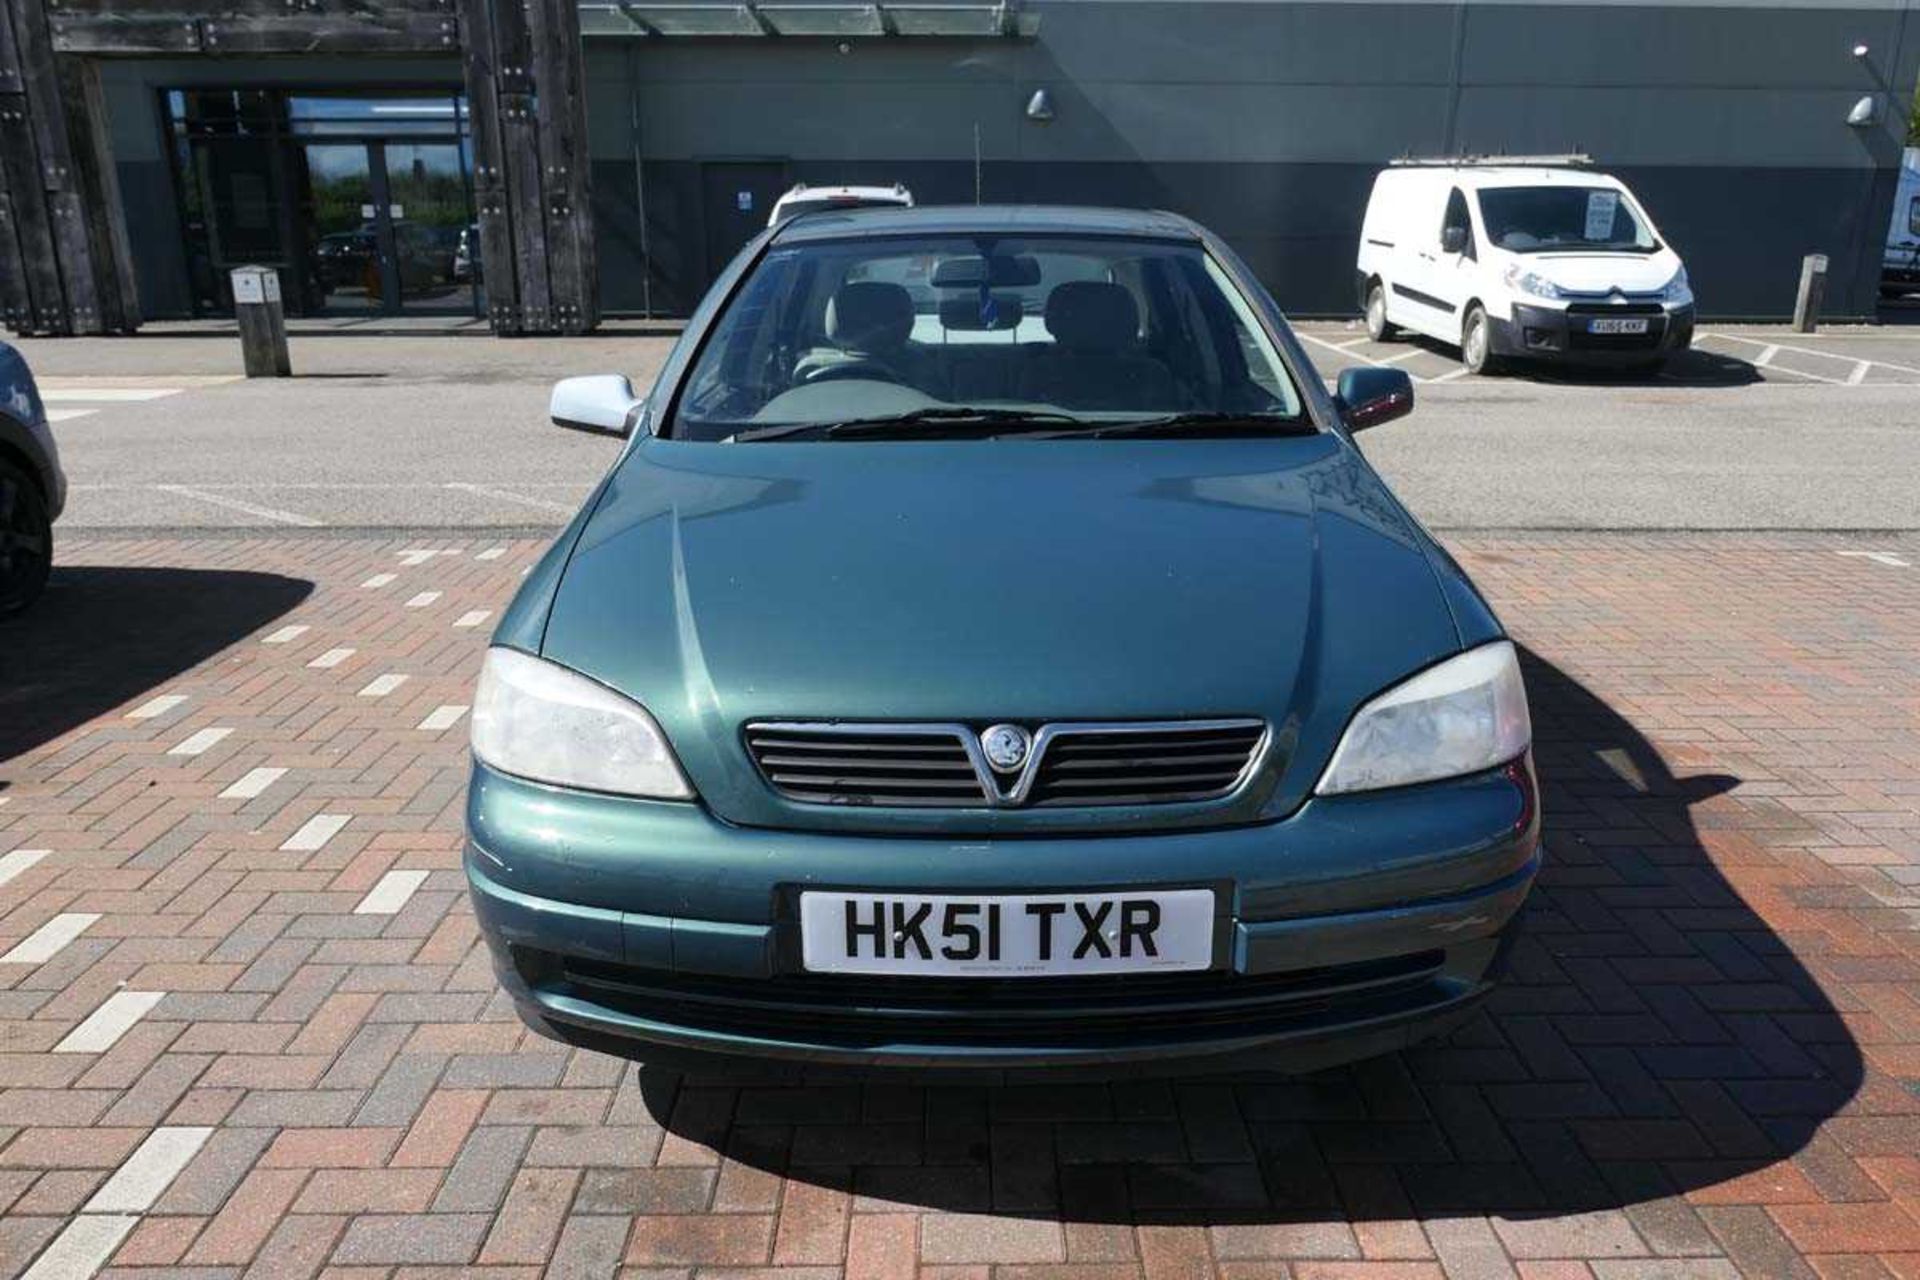 (HK51 TXR) Vauxhall Astra Club 8V, first registered 29.11.2001, 5 door hatchback in green, 1598cc - Bild 3 aus 11